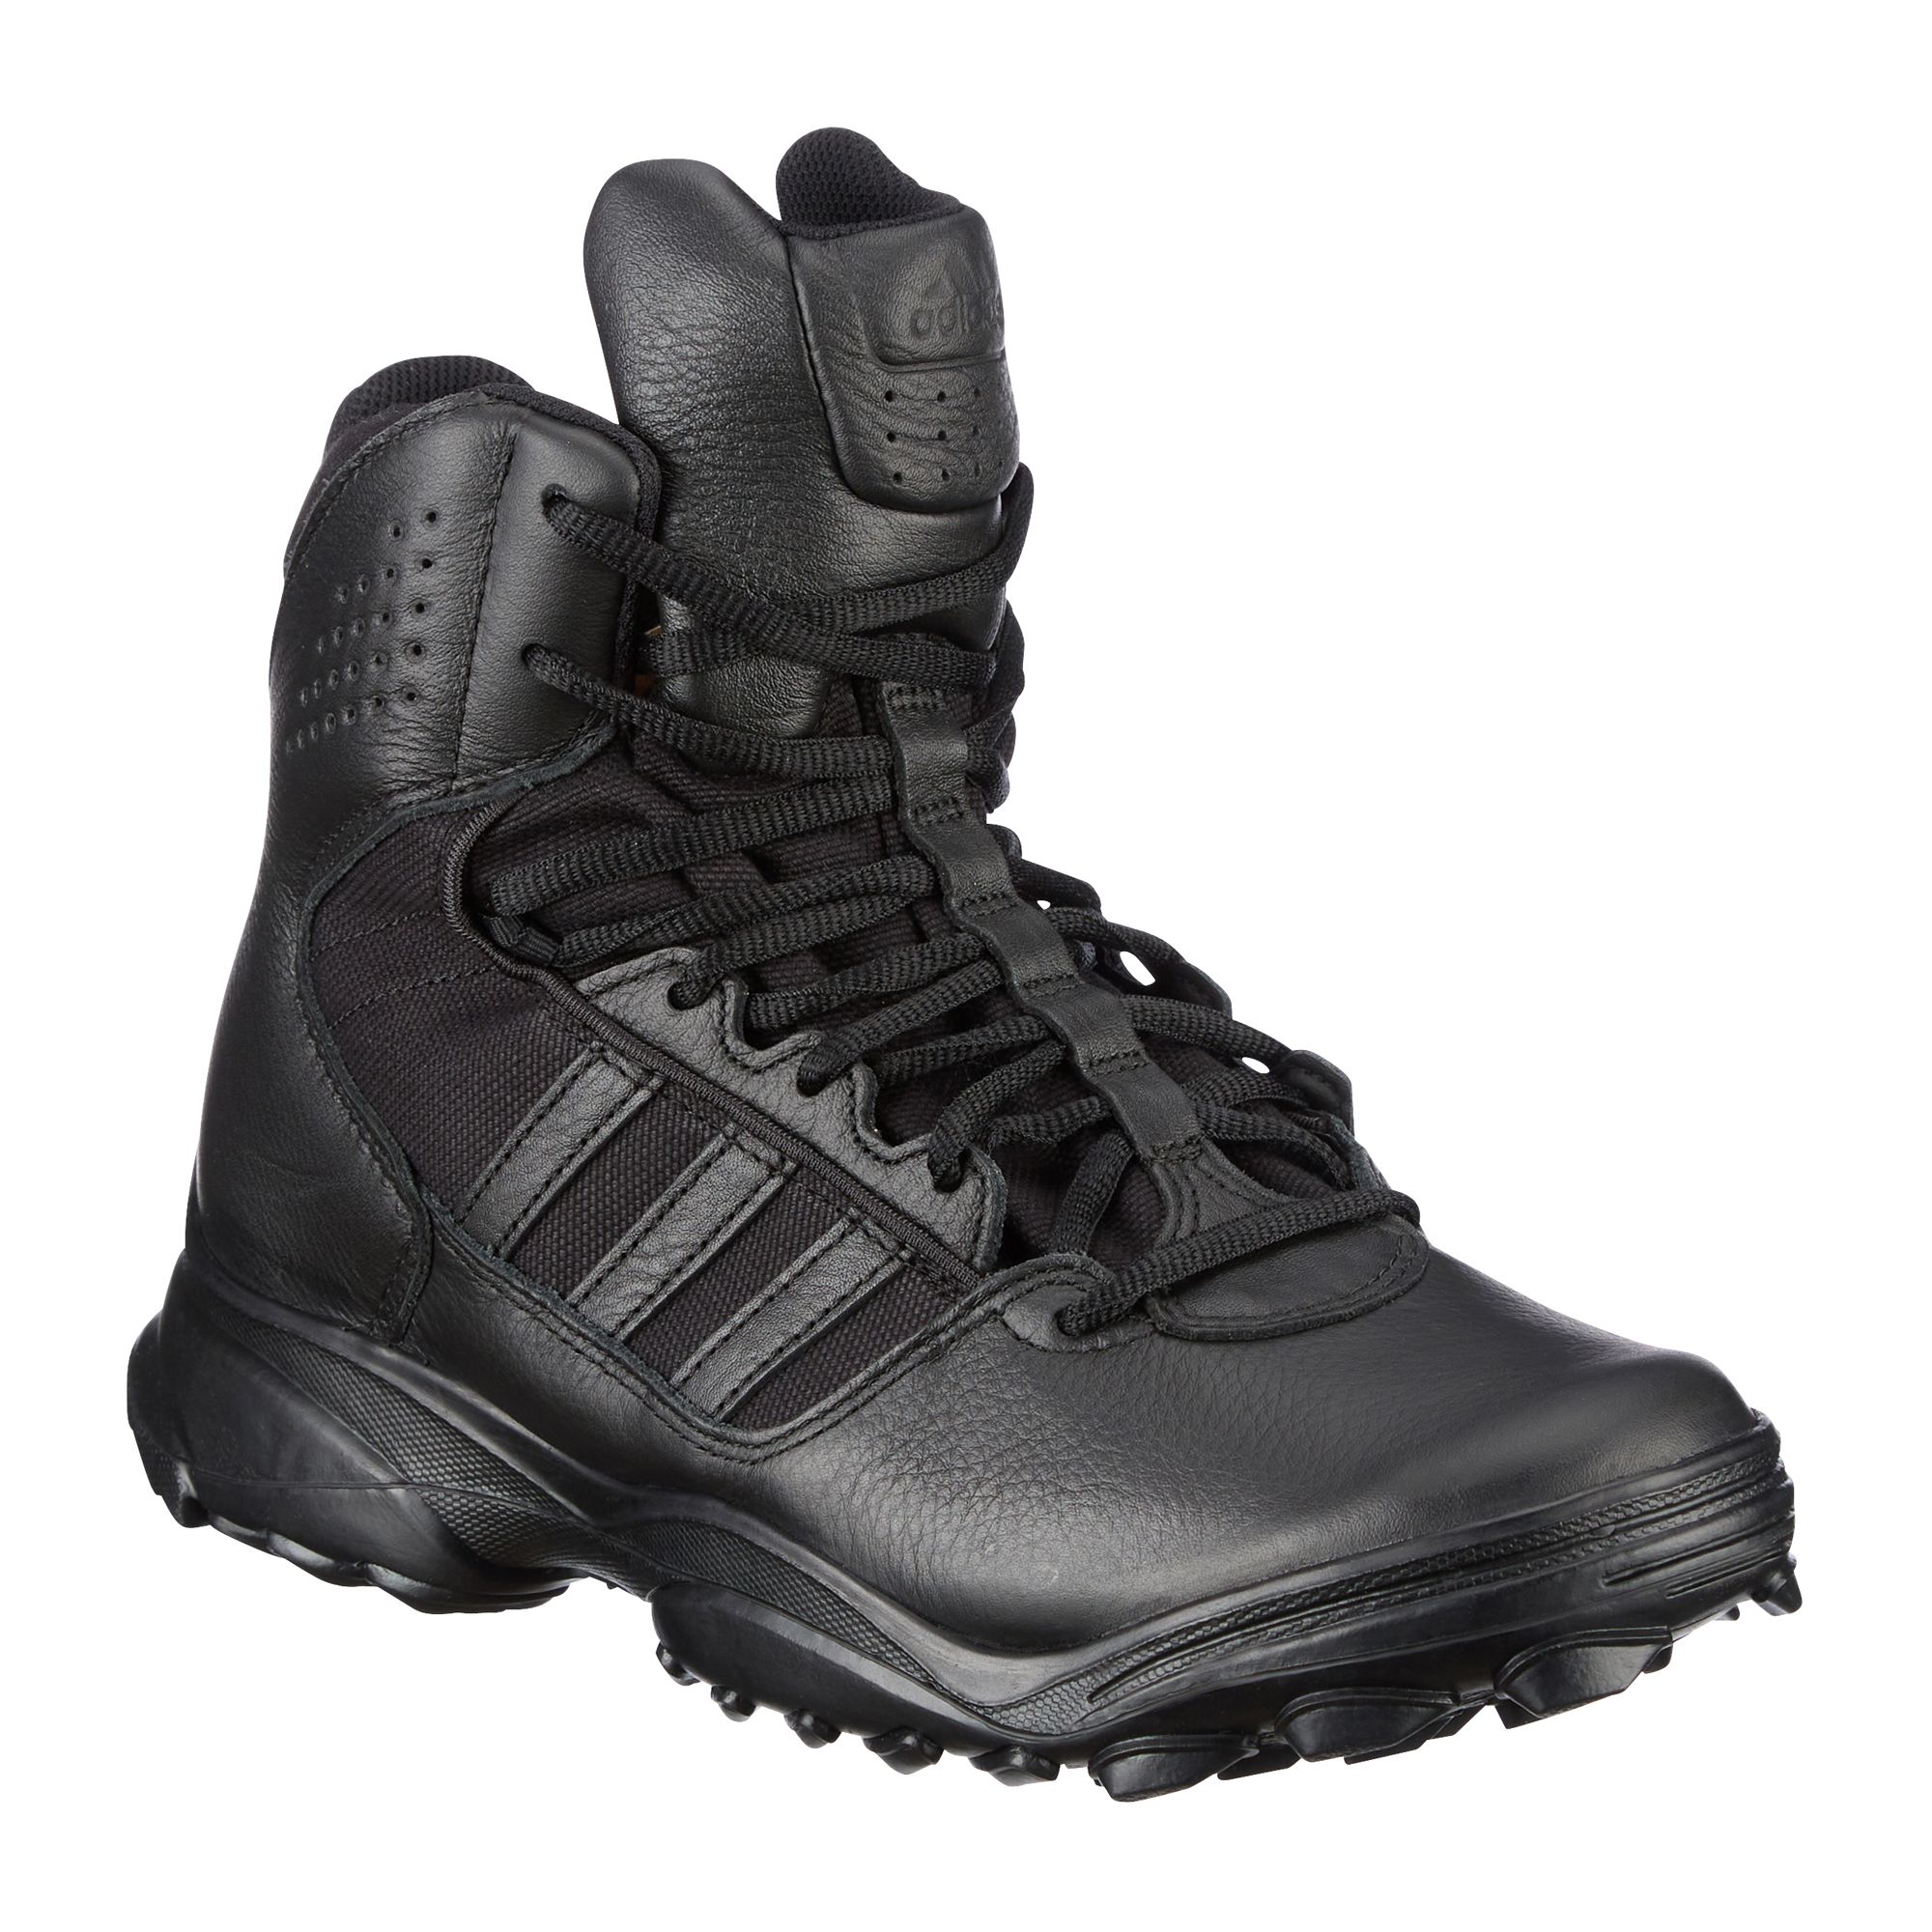 adidas performance men's gsg 9.7 tactical boot